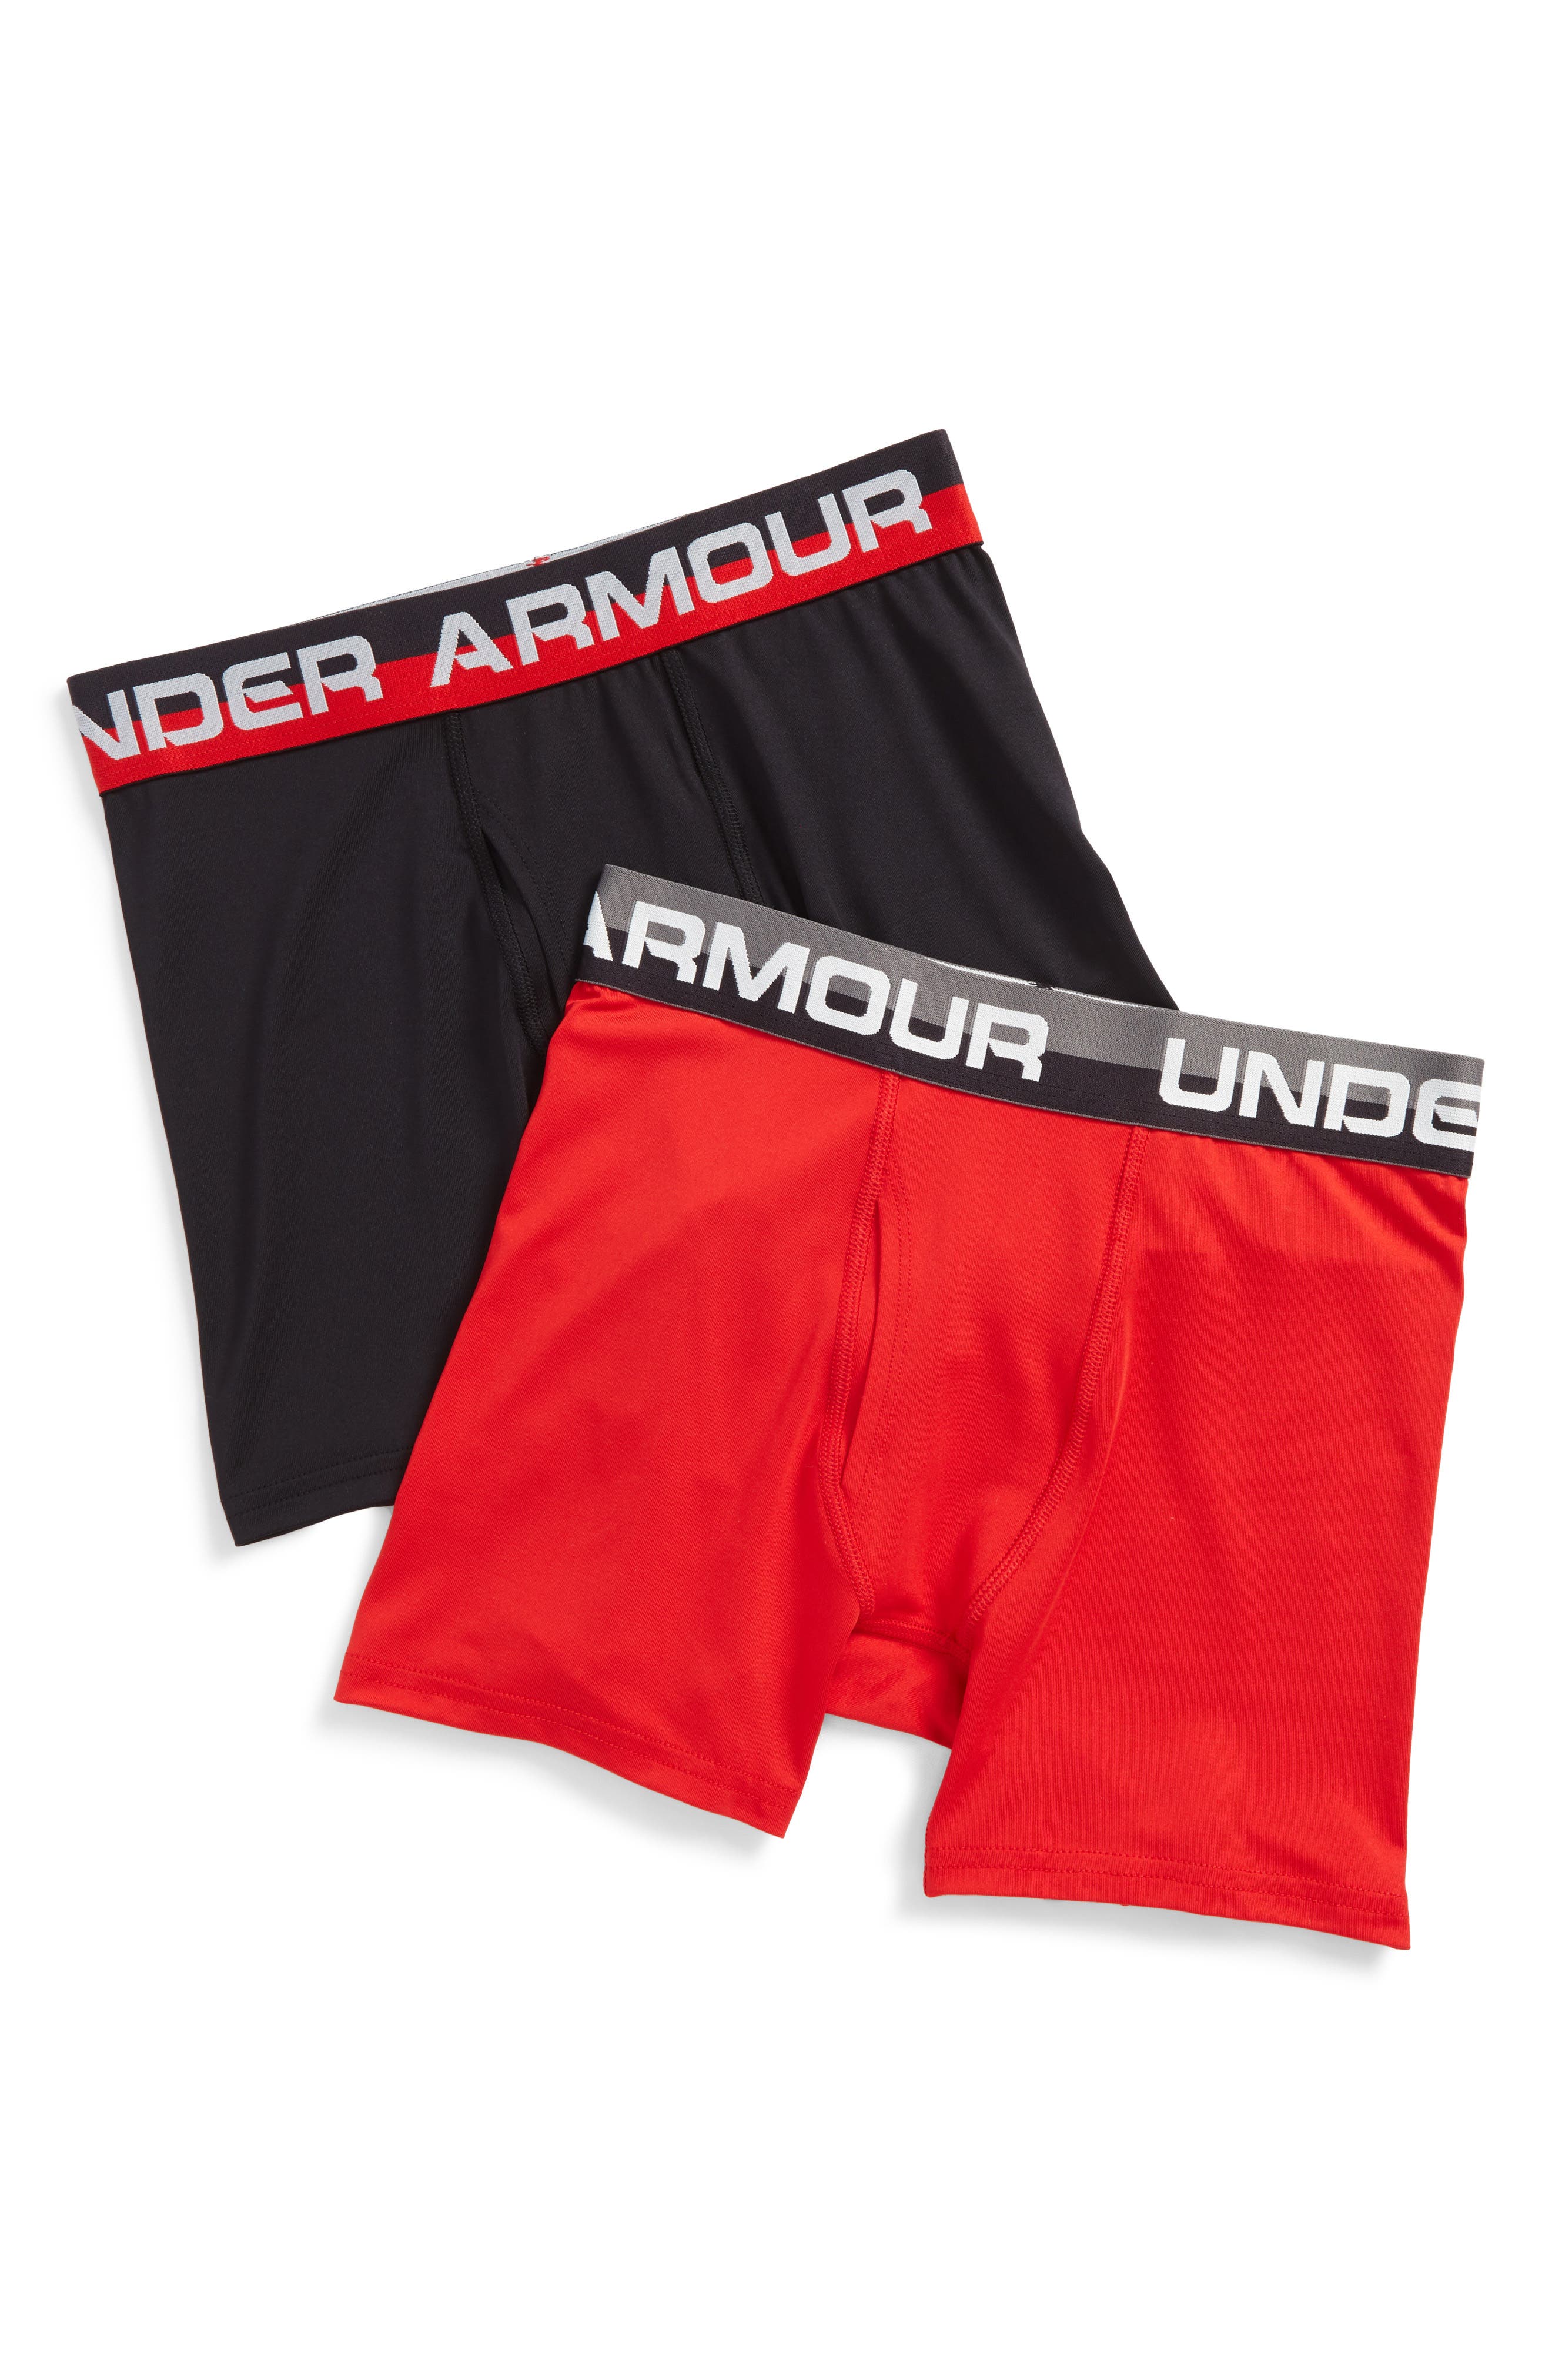 under armor boys underwear